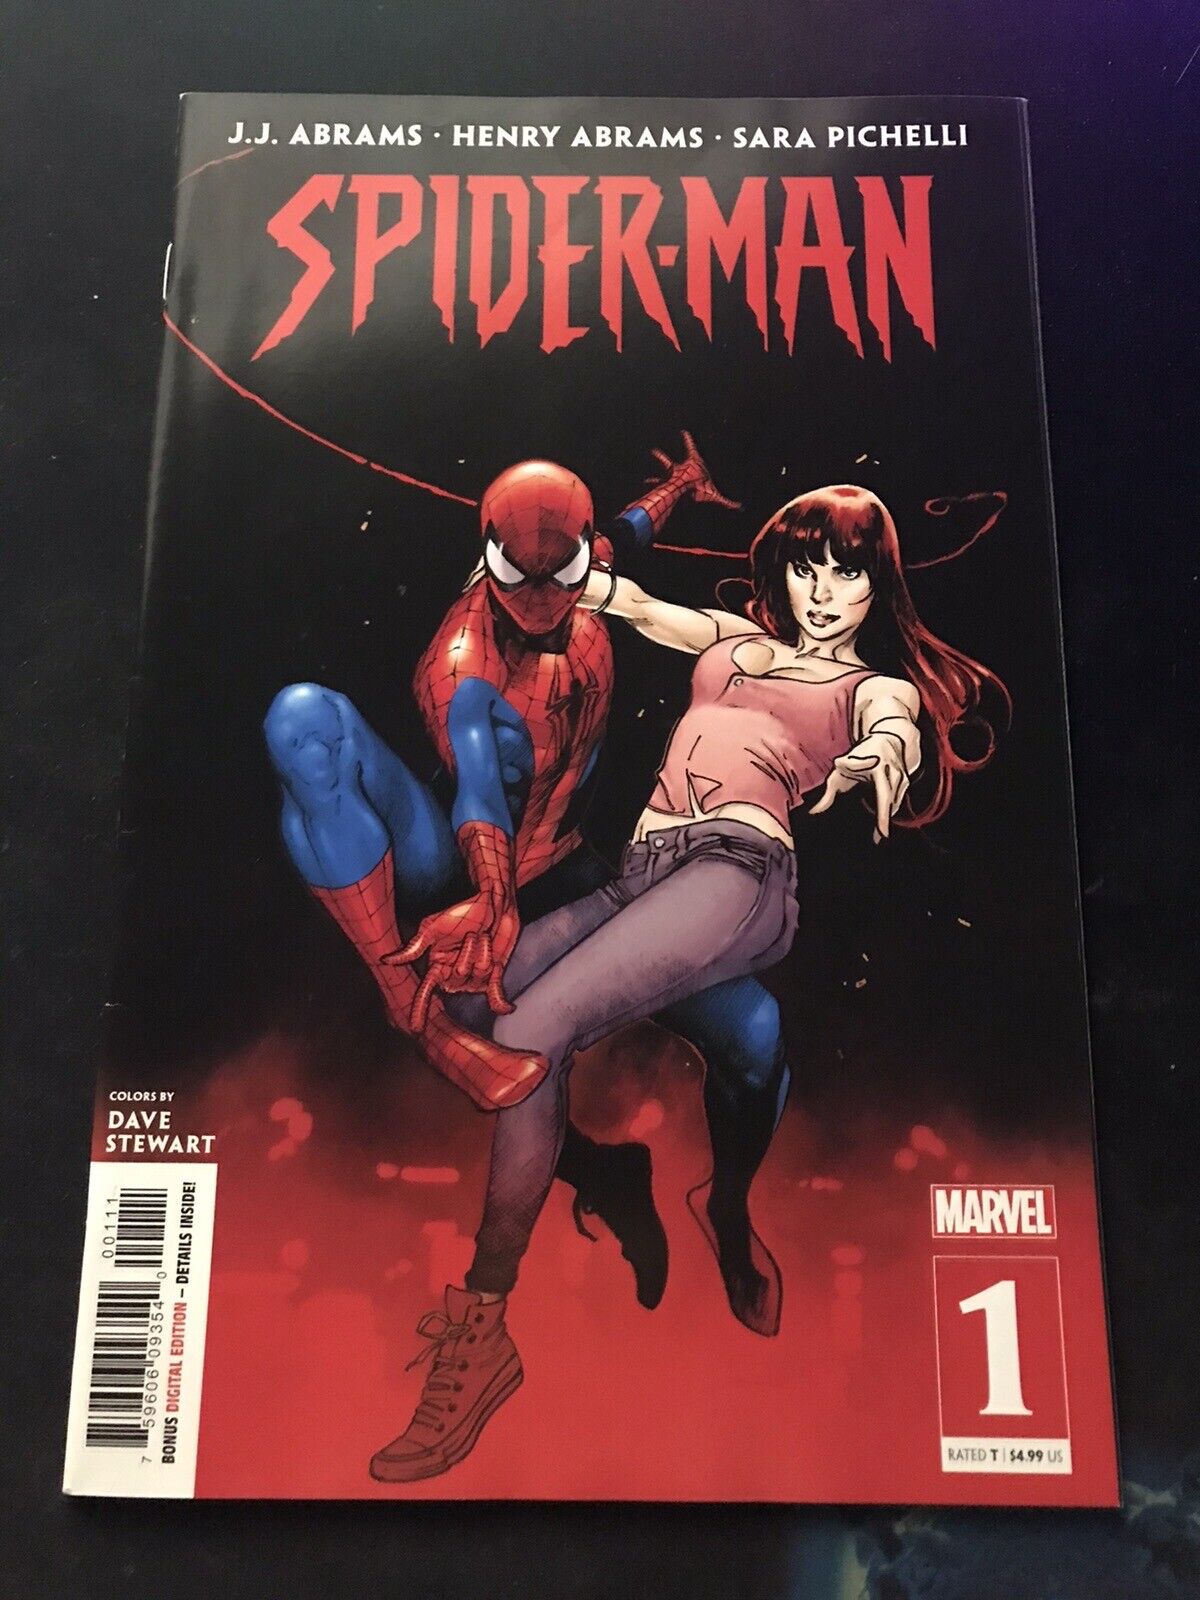 MARVEL COMICS: JJ Abram's: Spider-Man #1 (2019) Sara Pichelli (LN CONDITION)